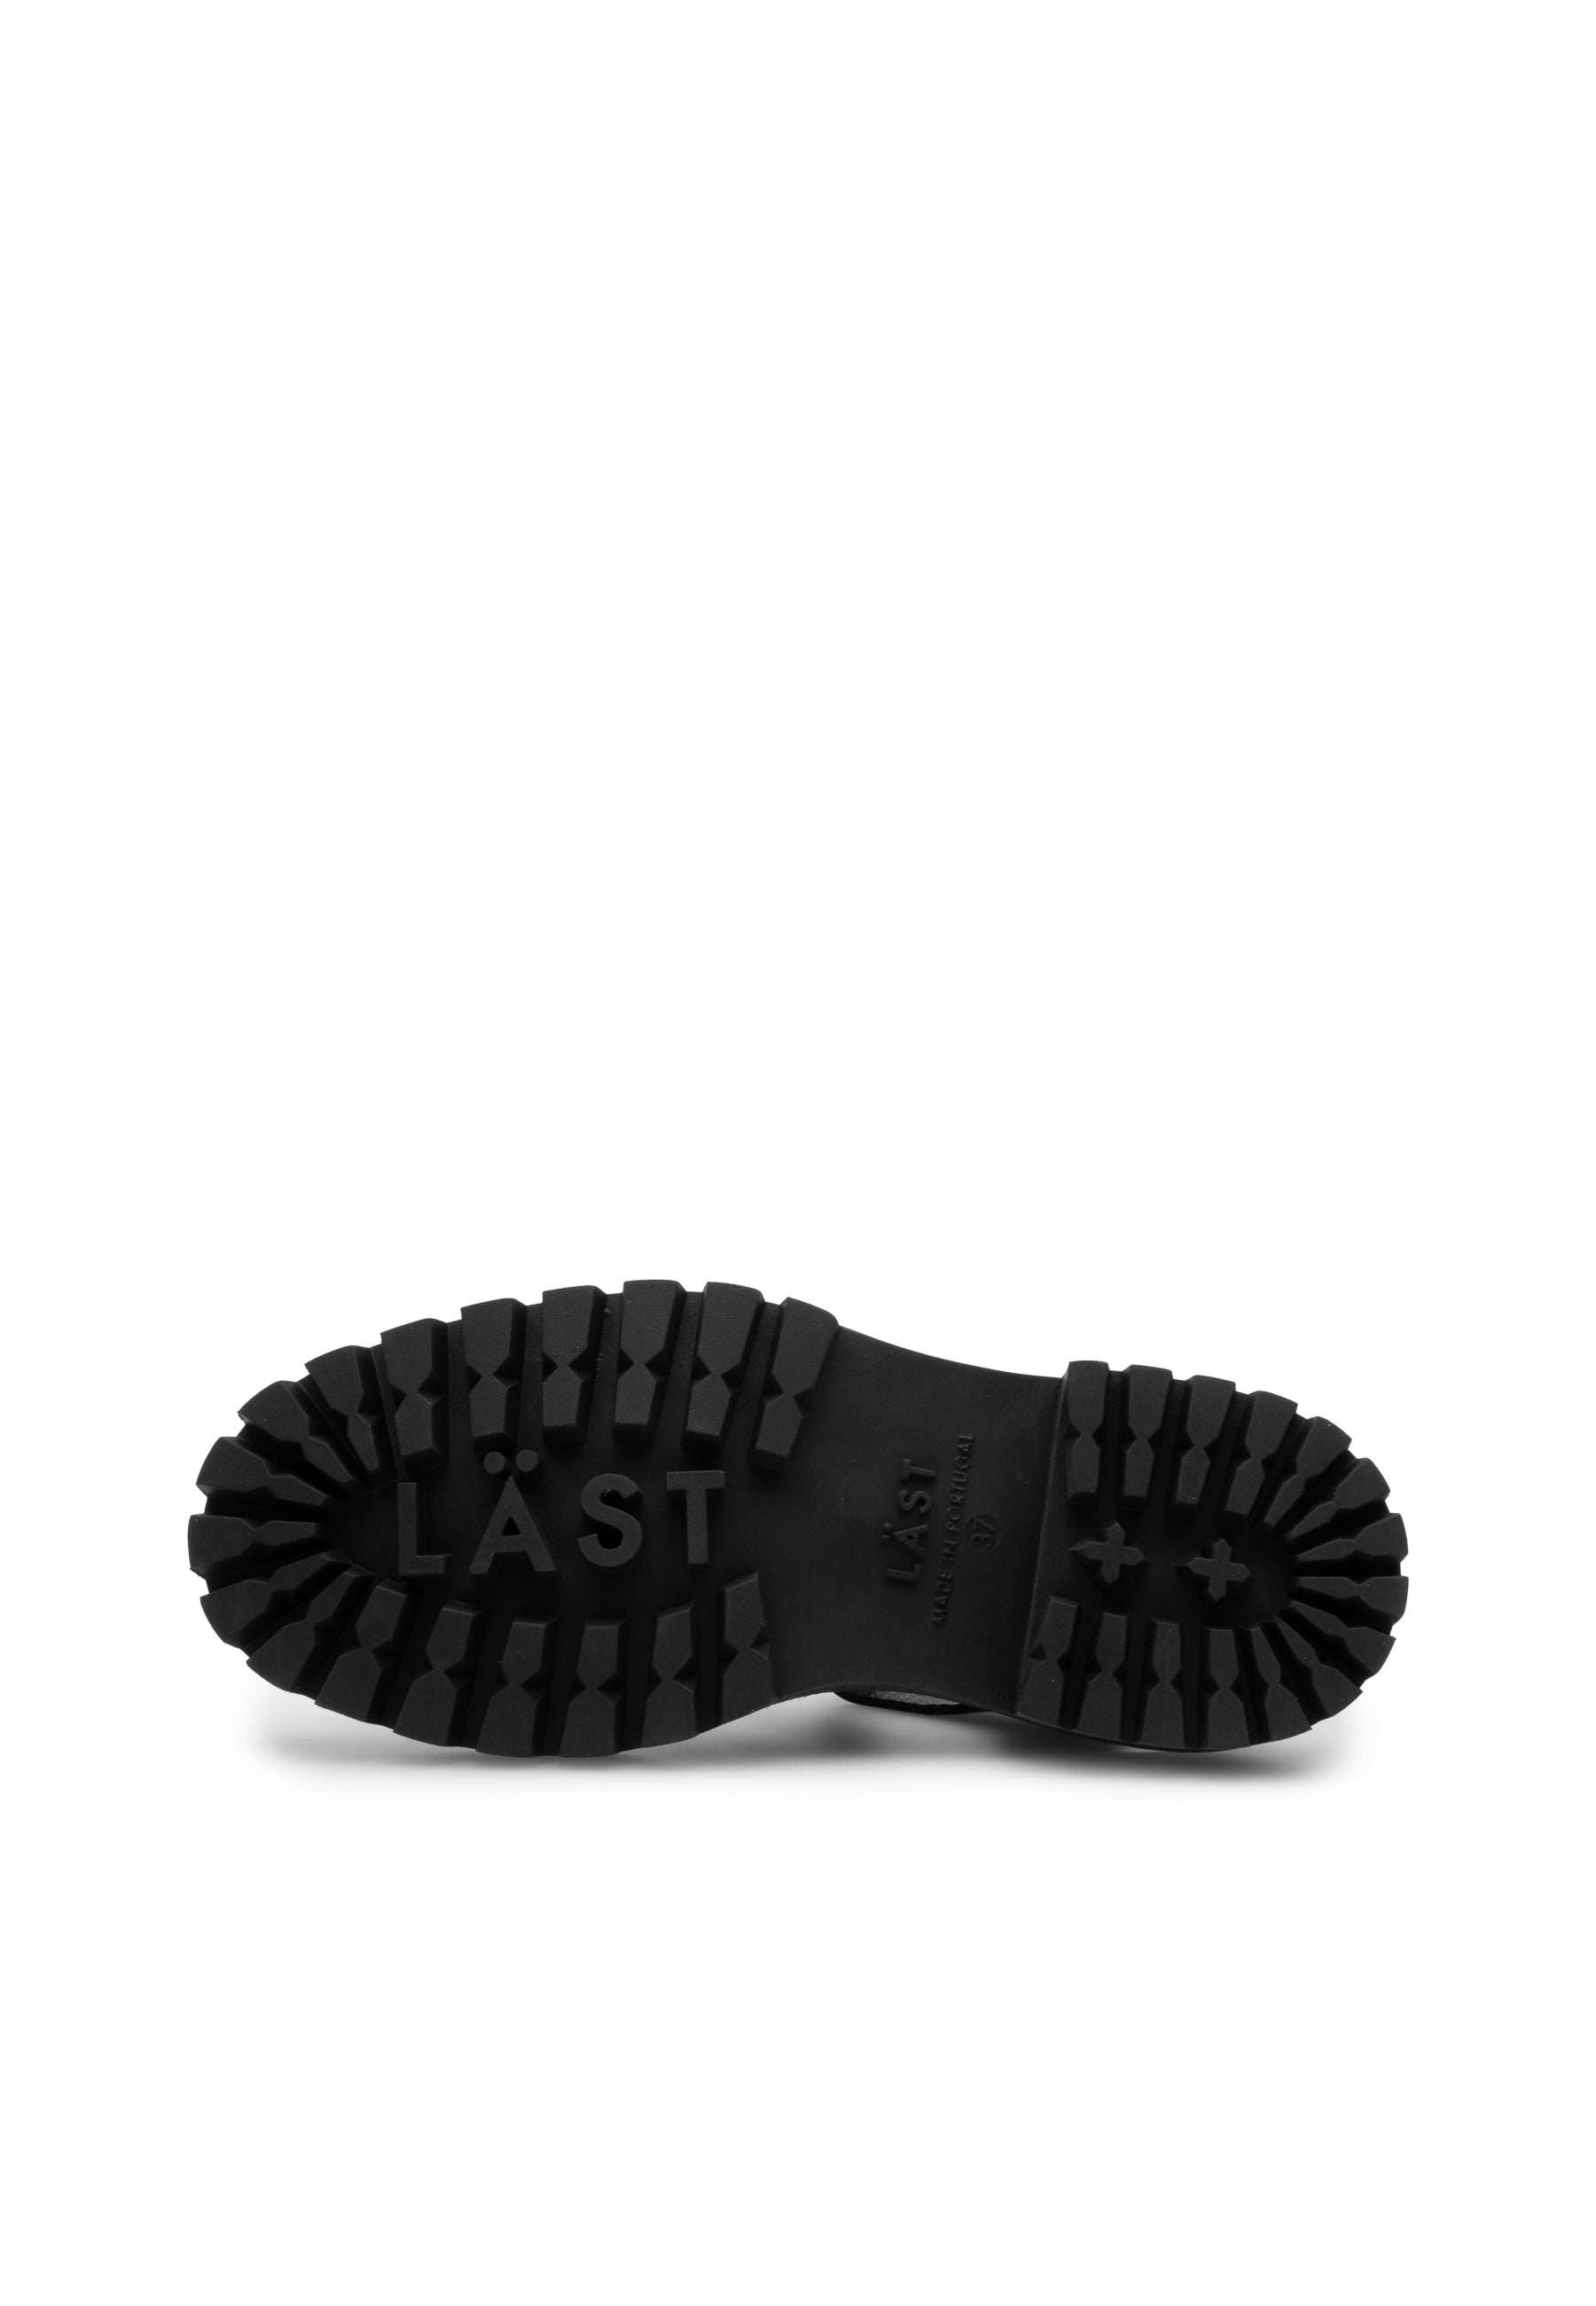 Daphny Black Leather Chunky Sandals LAST1518 - 7